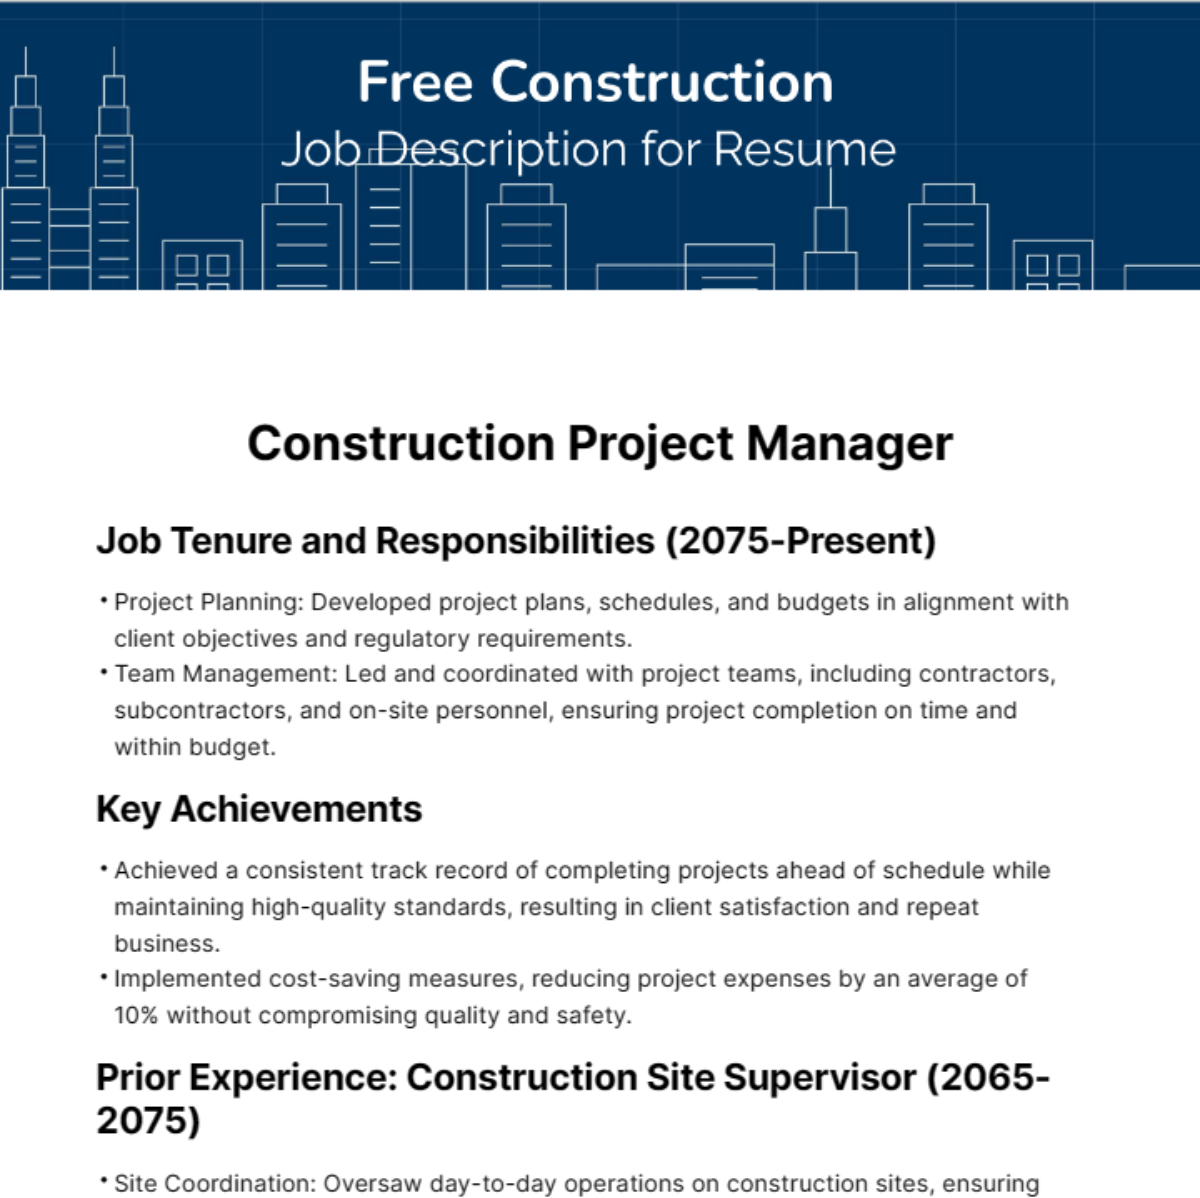 Construction Job Description for Resume Template